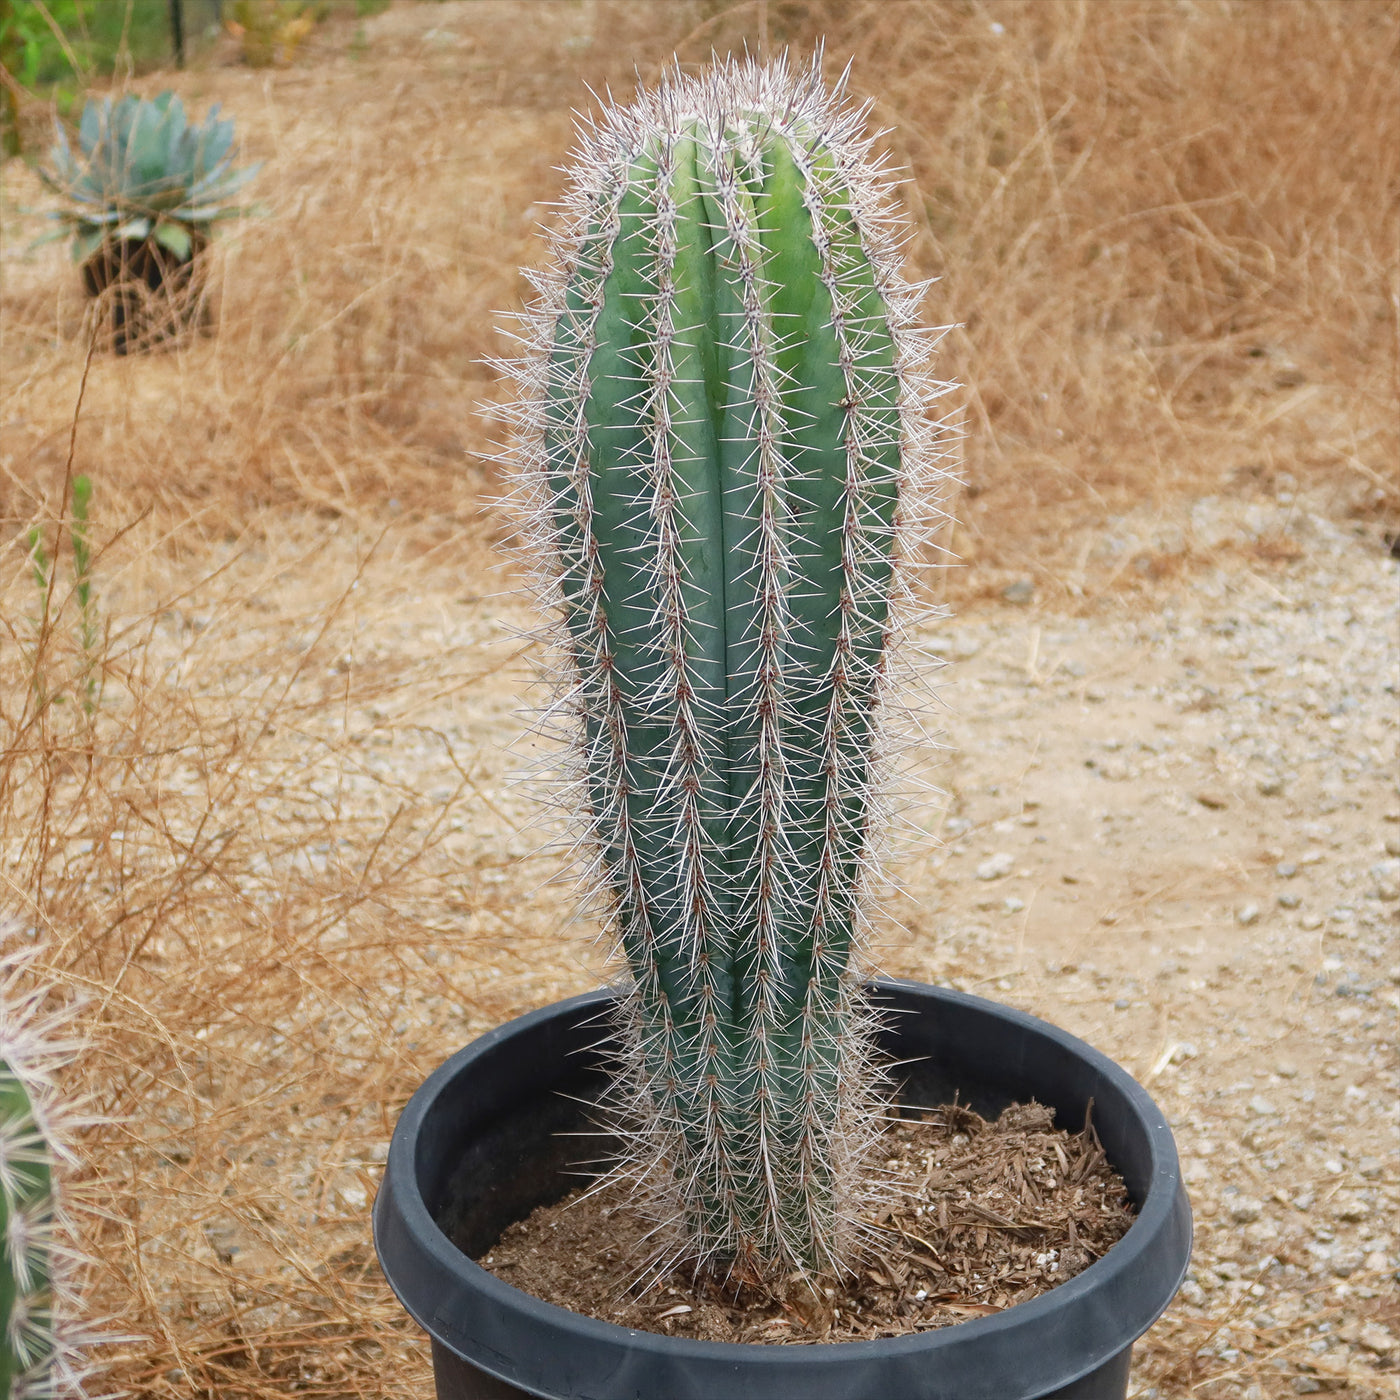 Giant Cardon or False Saguaro - Pachycereus pringlei